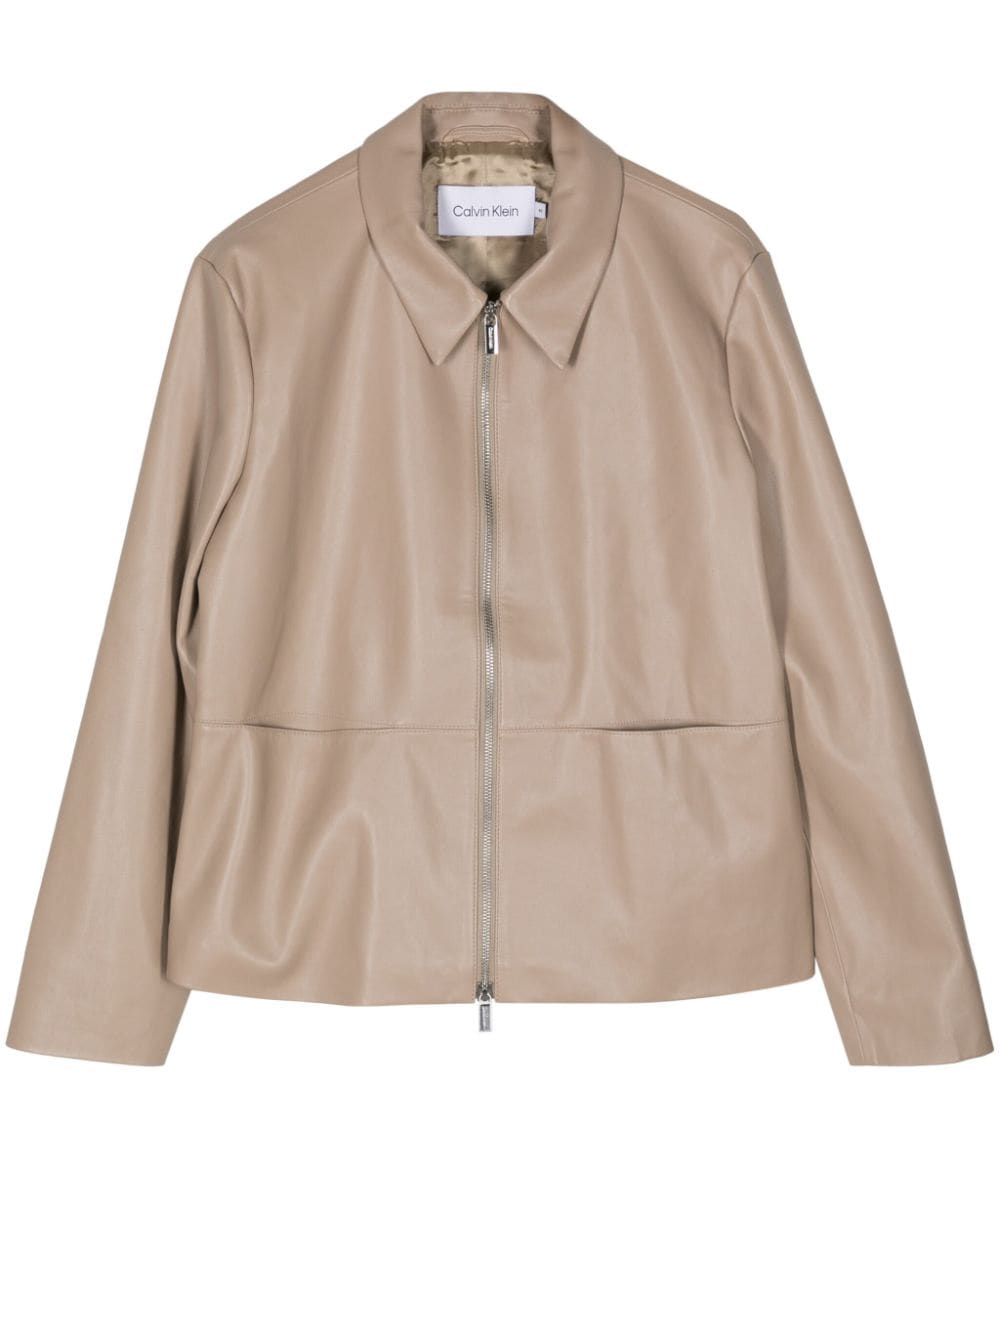 Calvin Klein regenerated-leather zip-up jacket - Toni neutri